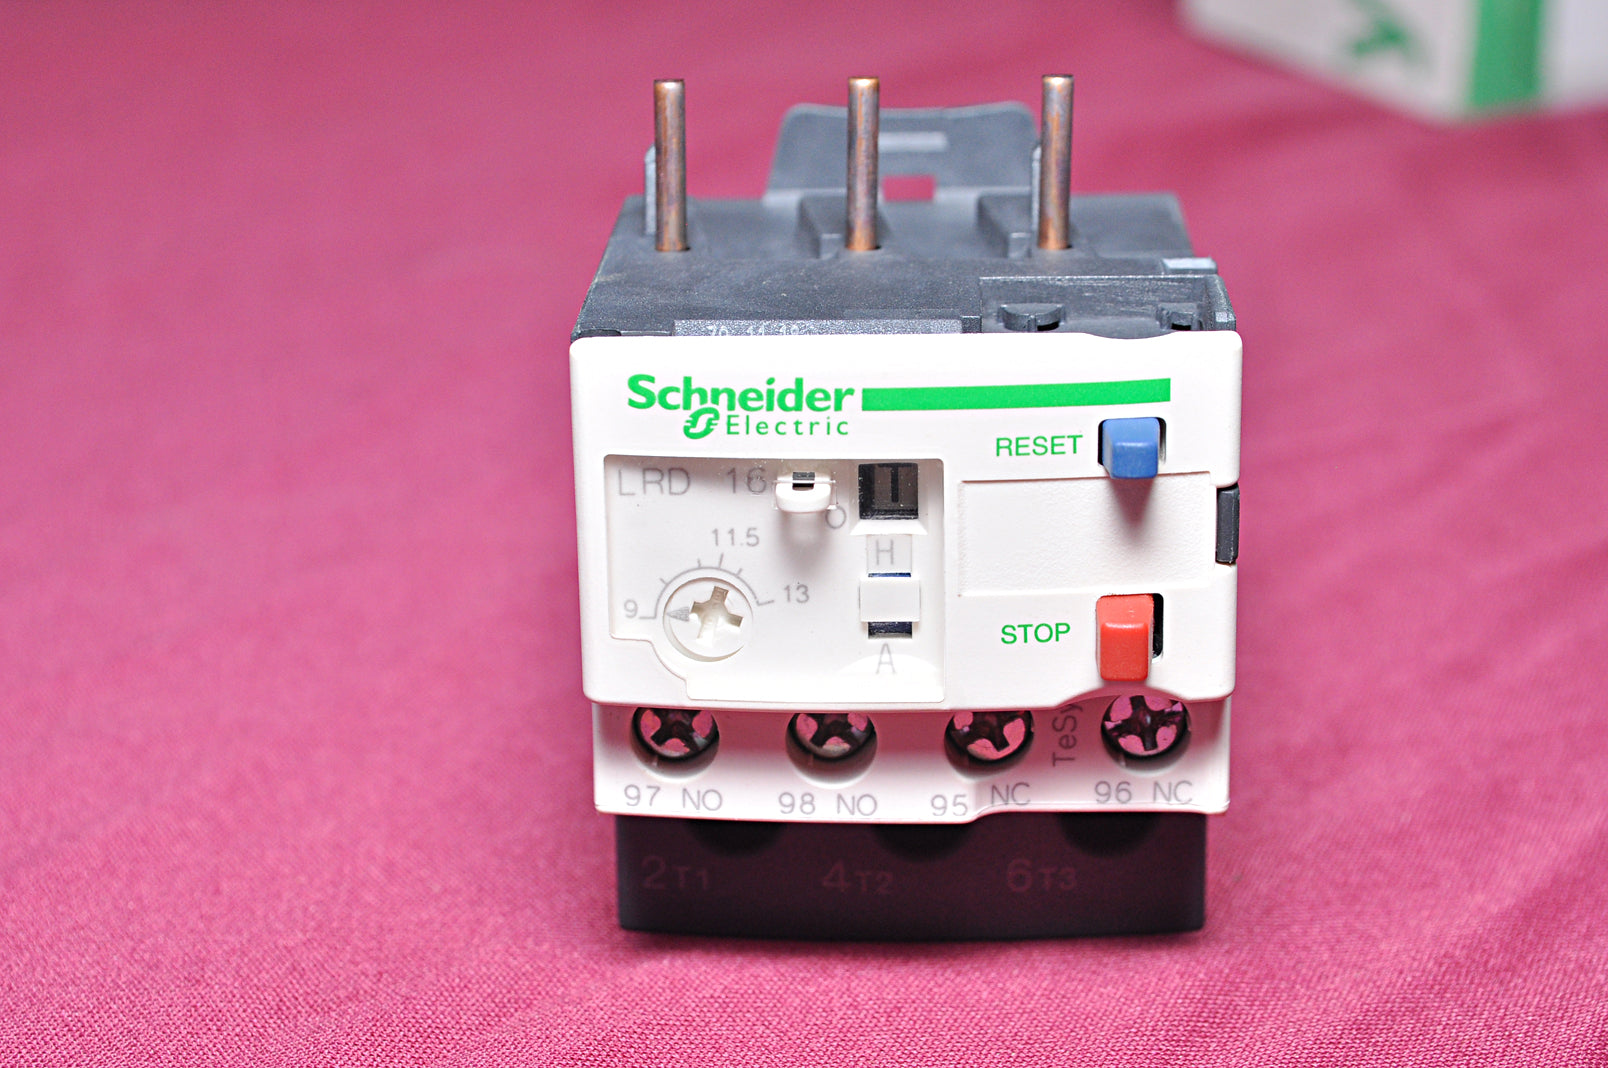 Schneider electric/telemecanique lrd 16 overload relay